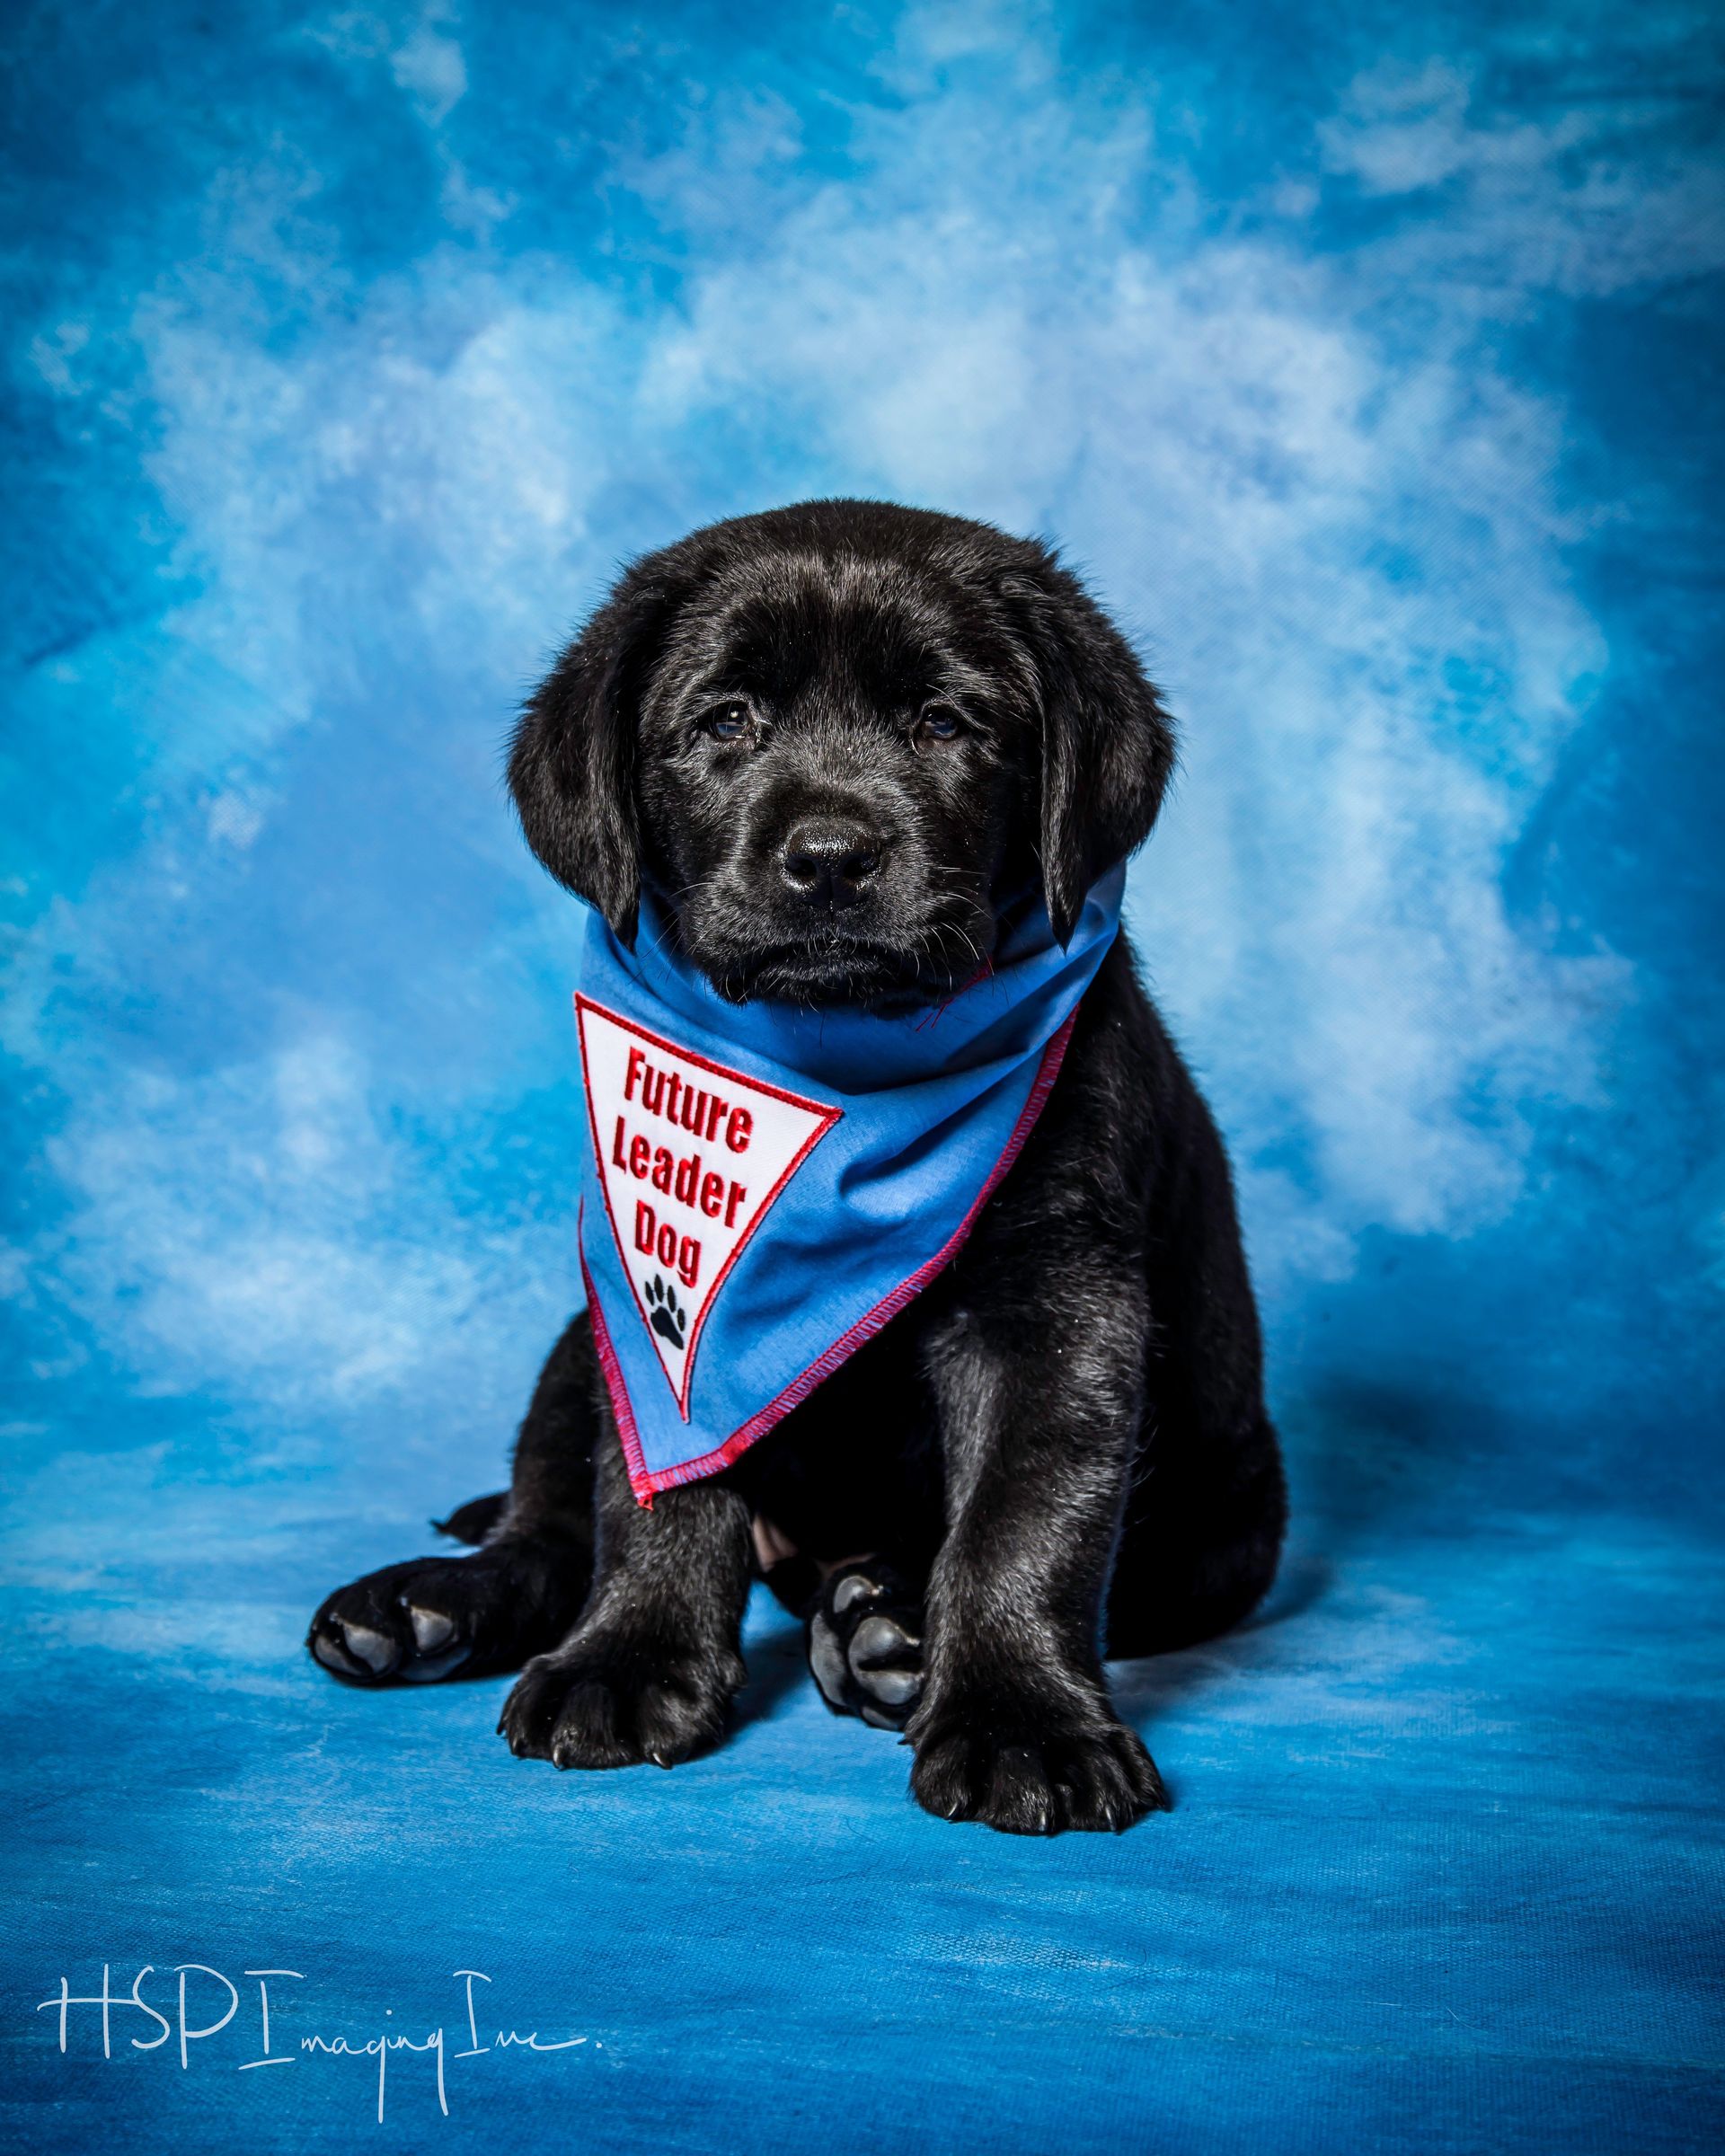 Future Leader Dog photos | HSP Imaging Fenton Michigan